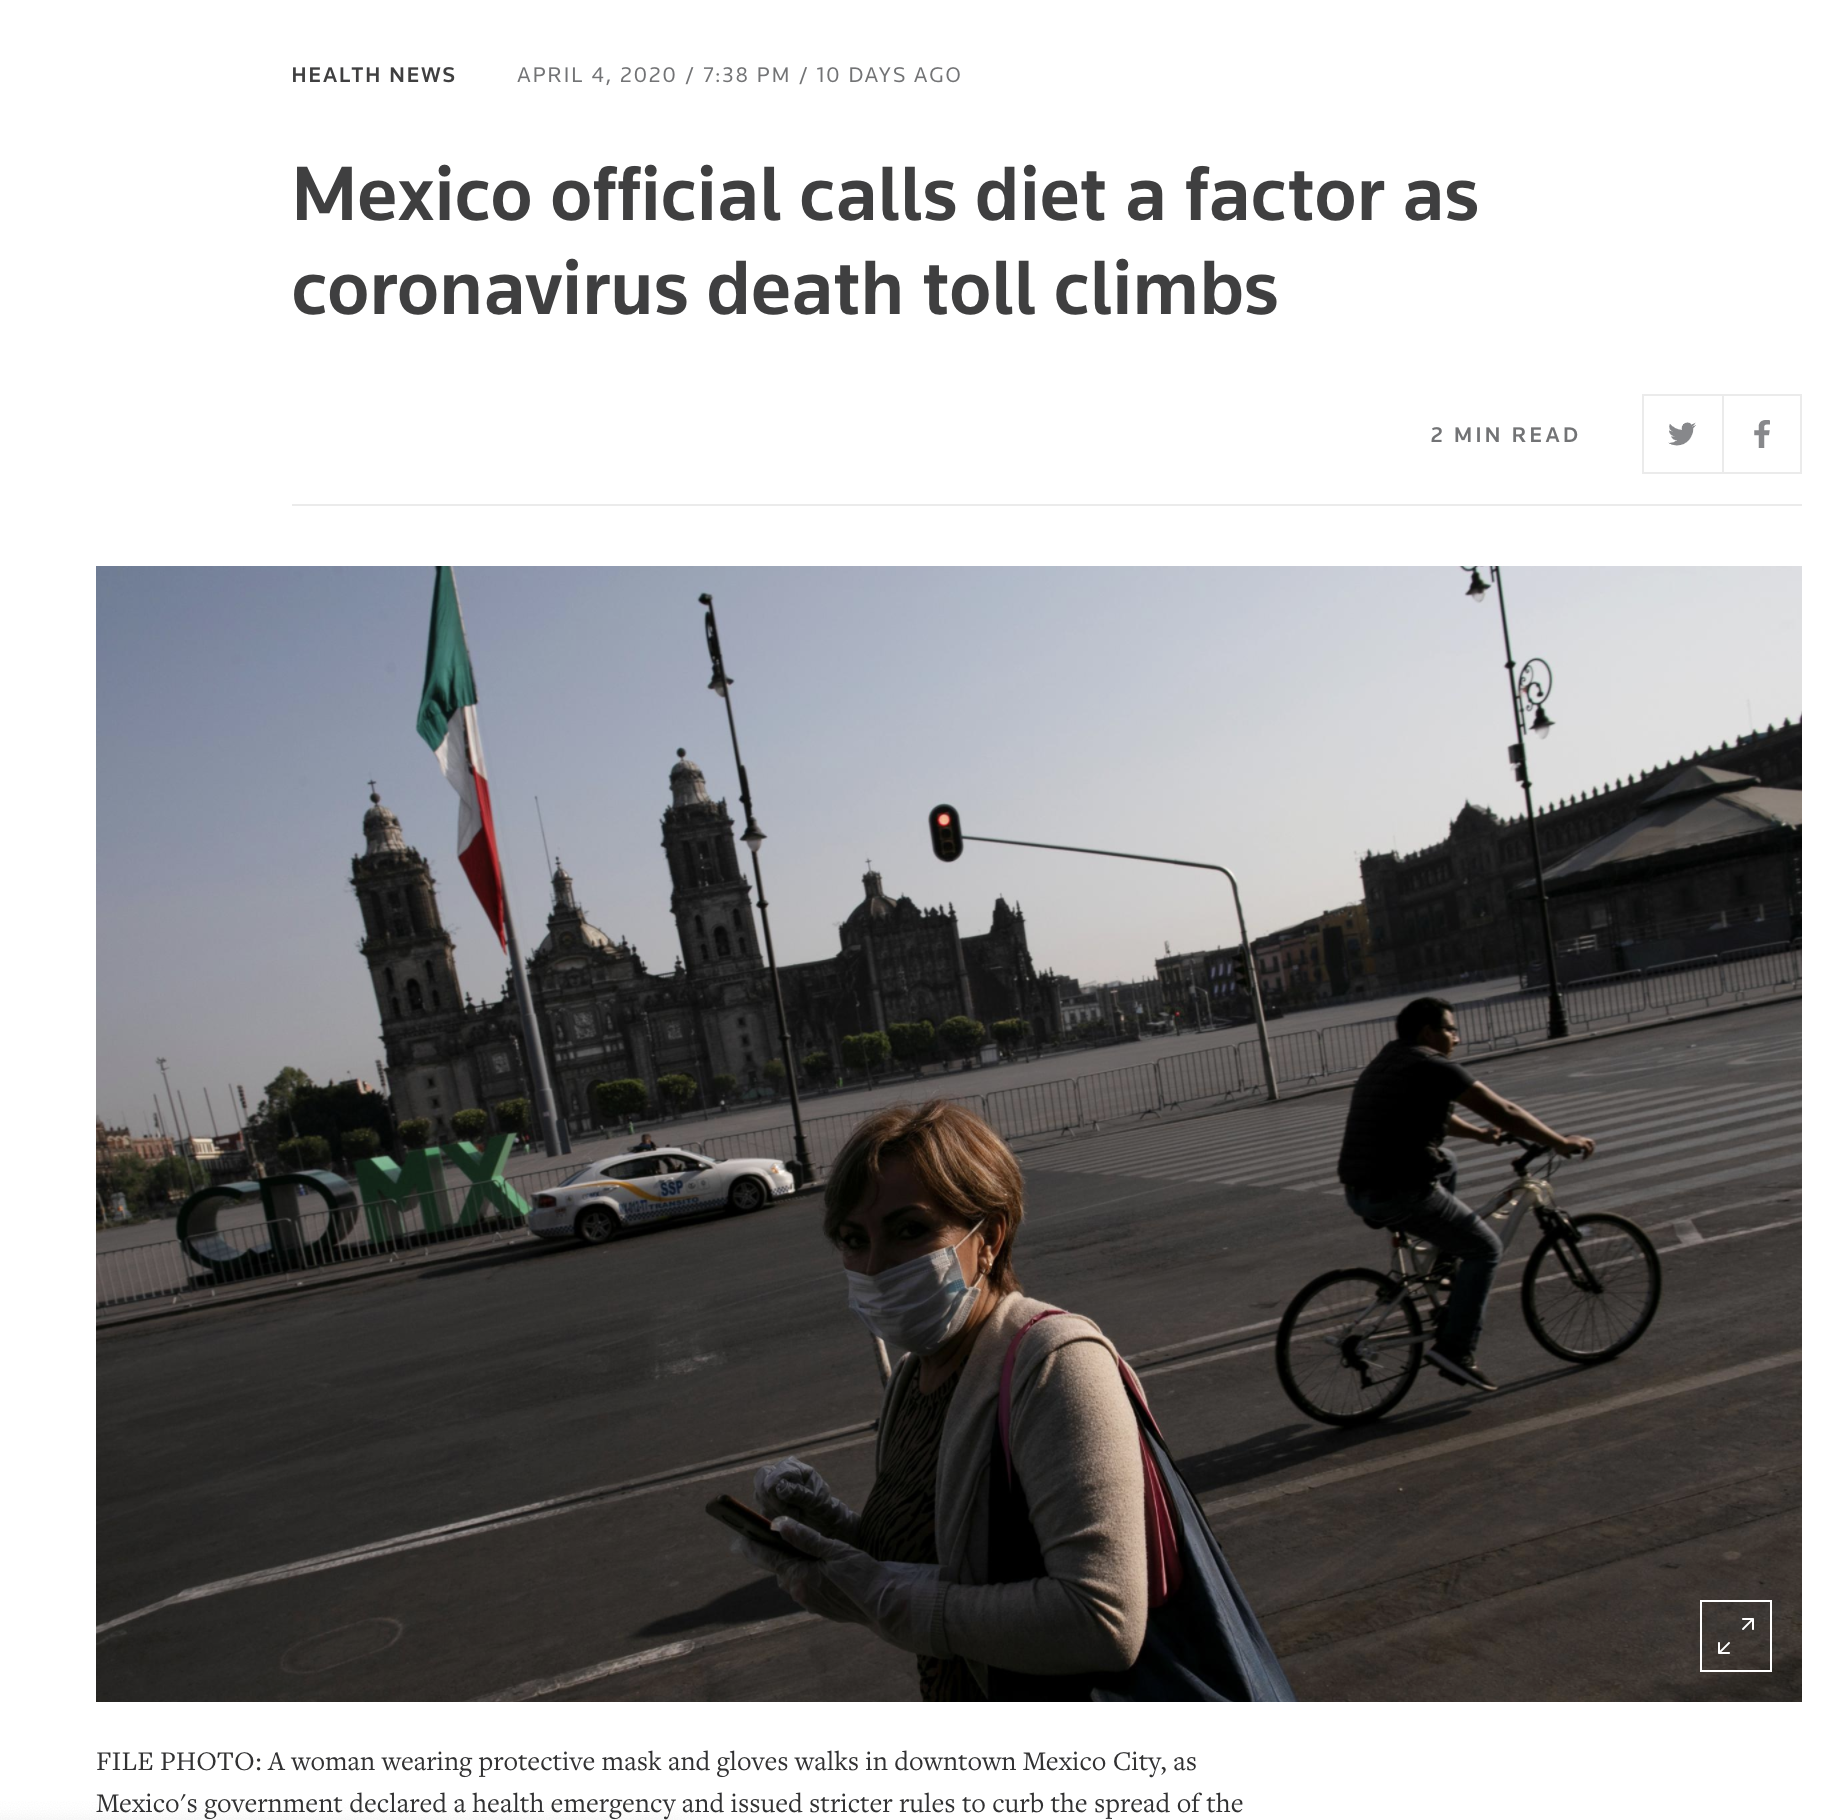 via: https://www.reuters.com/article/us-health-coronavirus-mexico-idUSKBN21N017